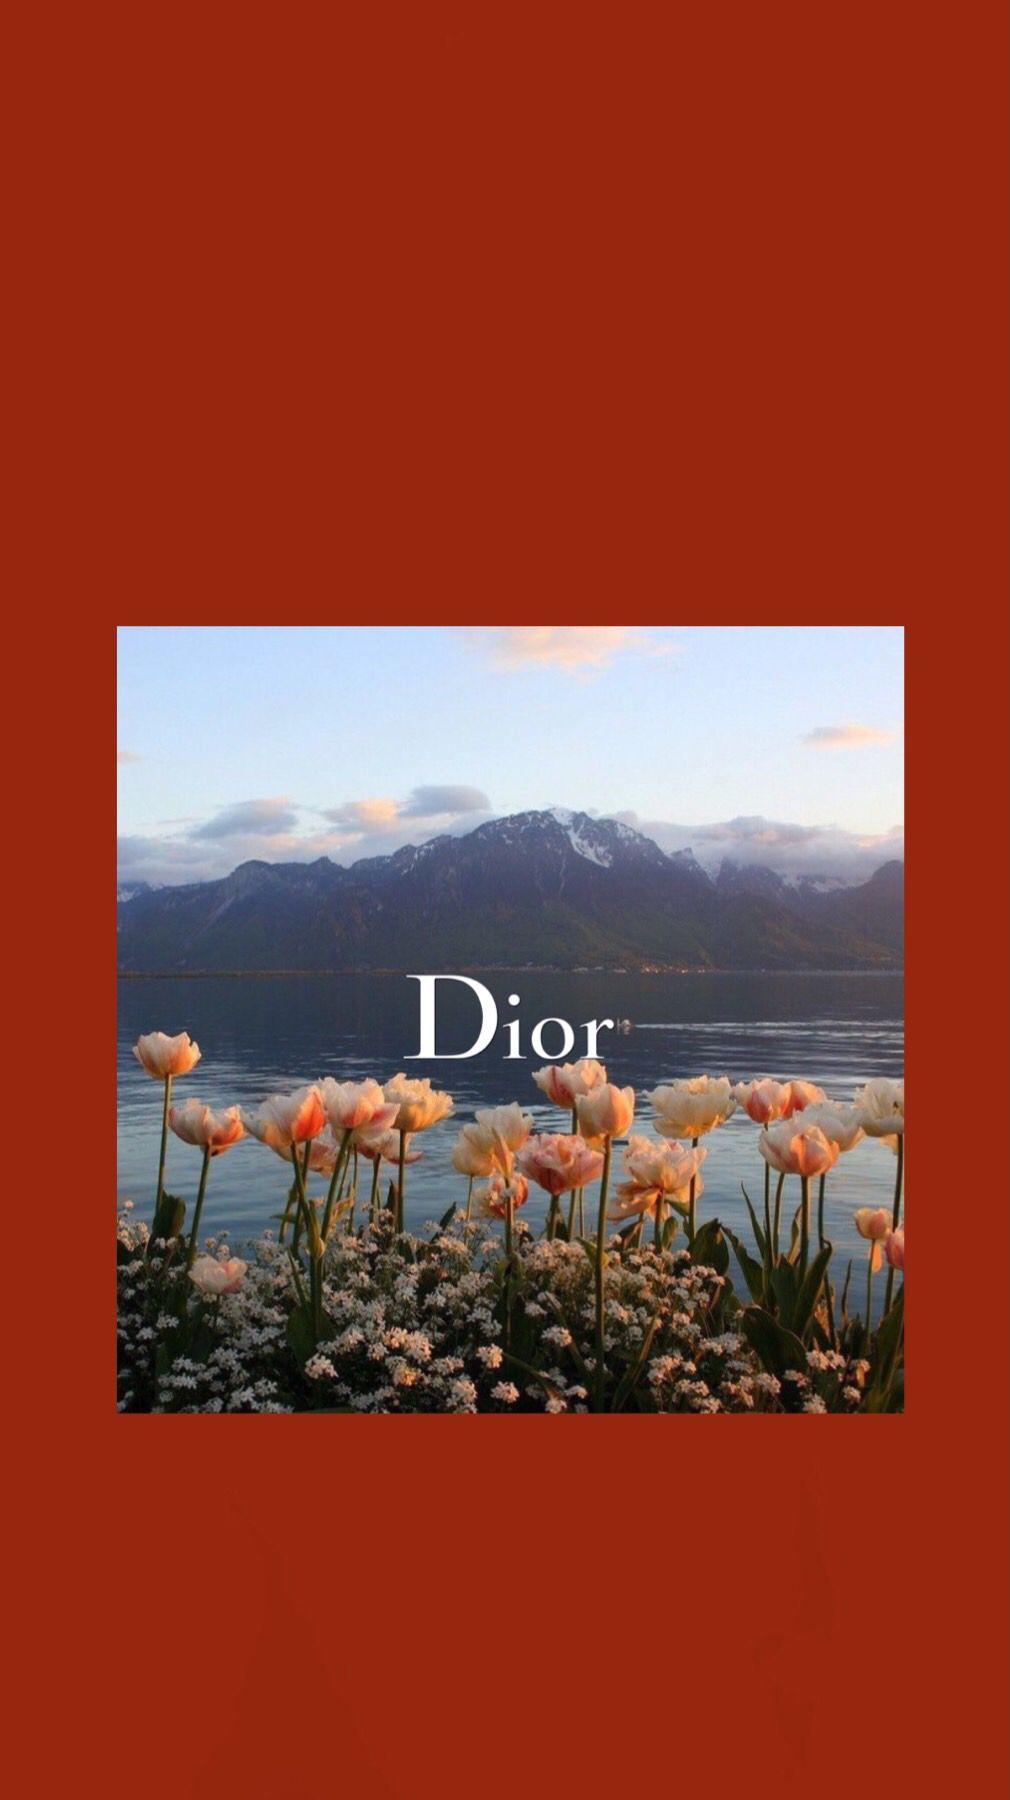 Dior wallpaper, dior aesthetic, wallpaper, dior design | Pretty wallpaper  iphone, Dior wallpaper, Aesthetic iphone wallpaper